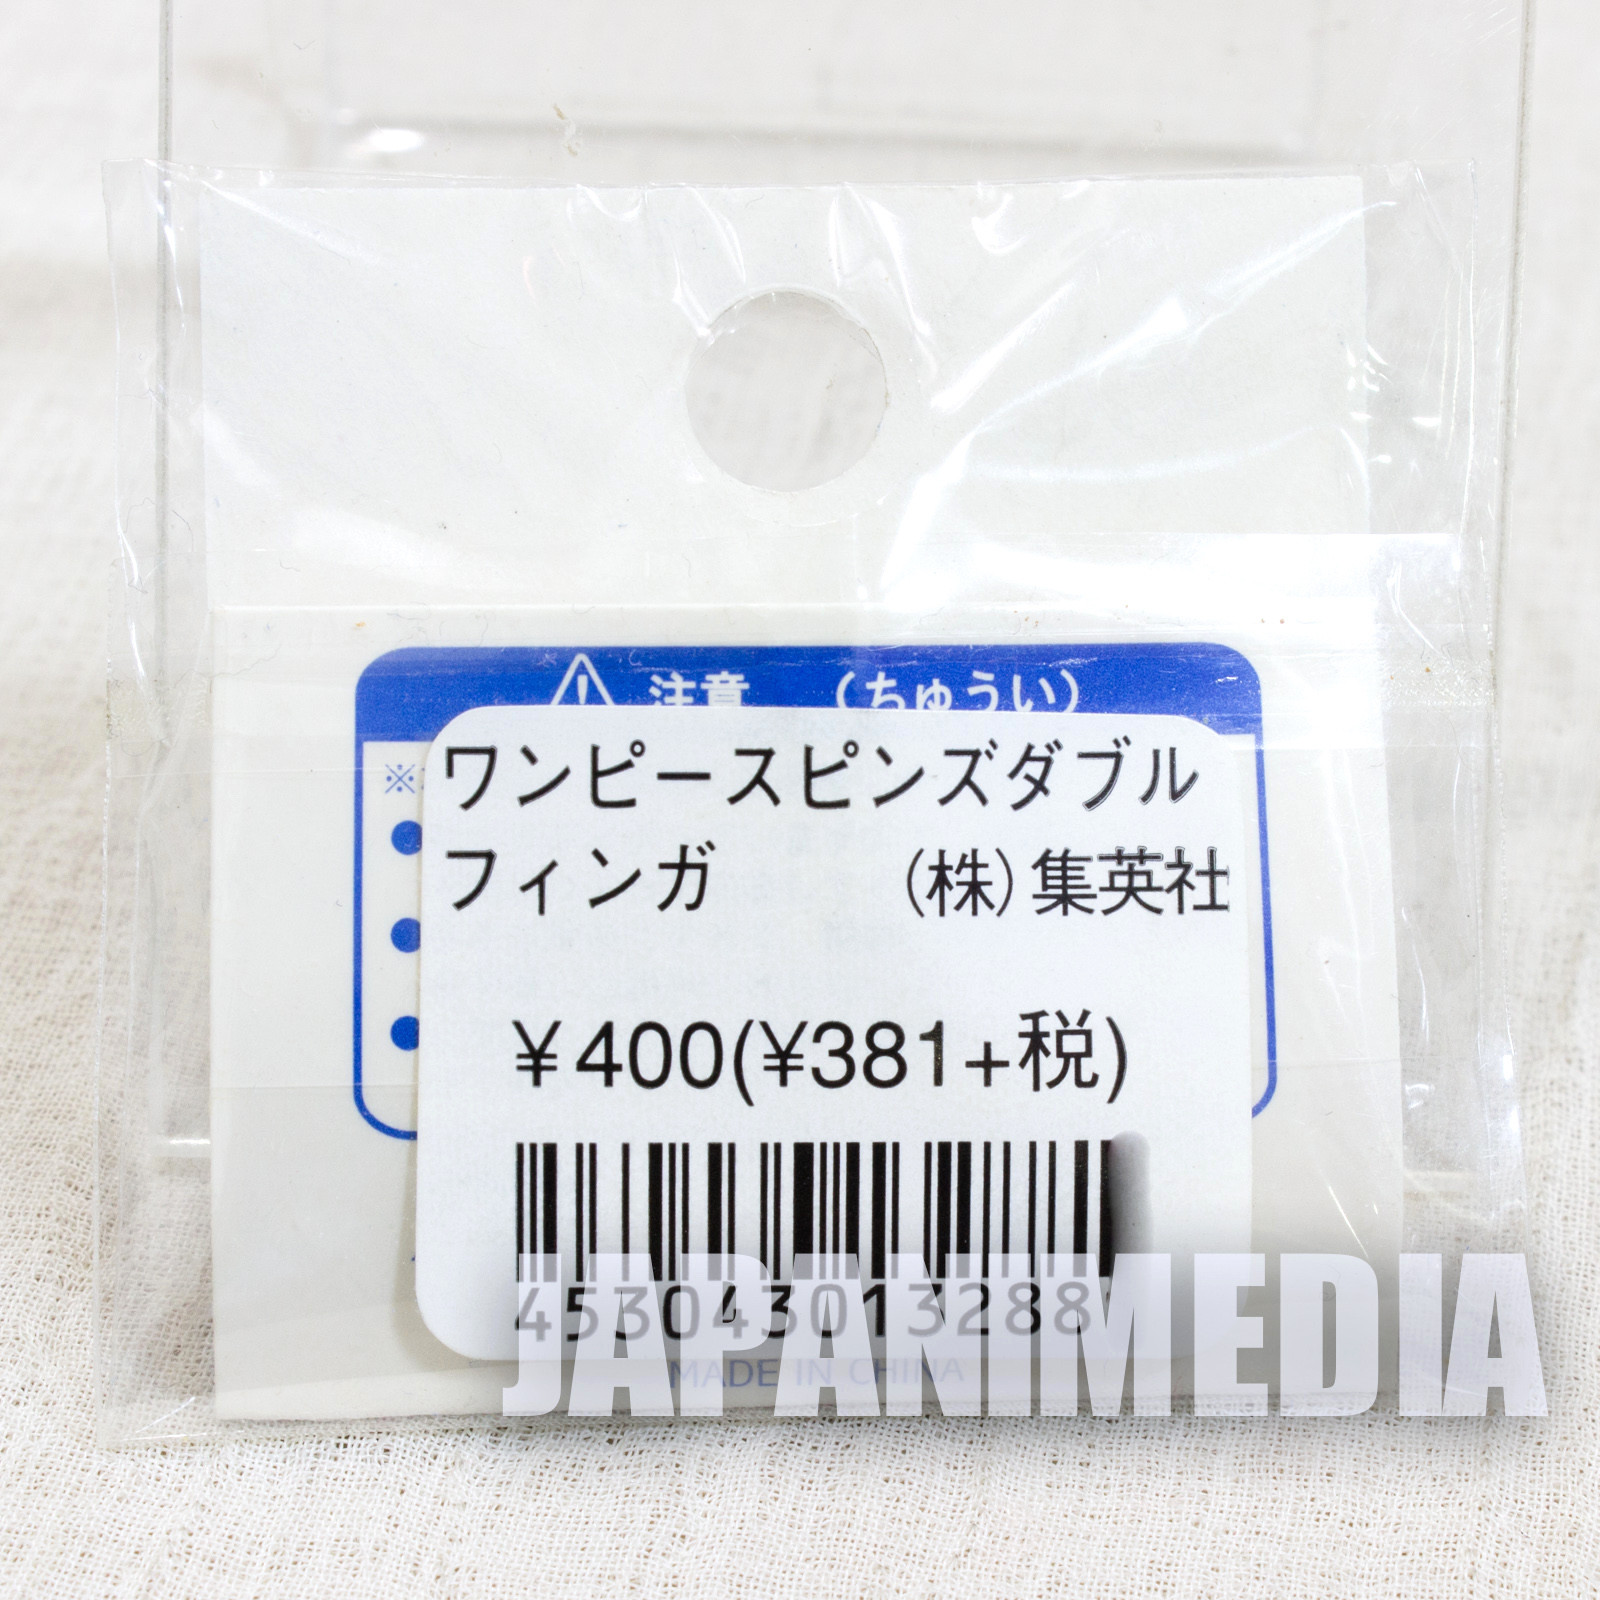 ONE PIECE Miss Doublefinger (Zala) Weekly Jump Character Pins JAPAN ANIME MANGA